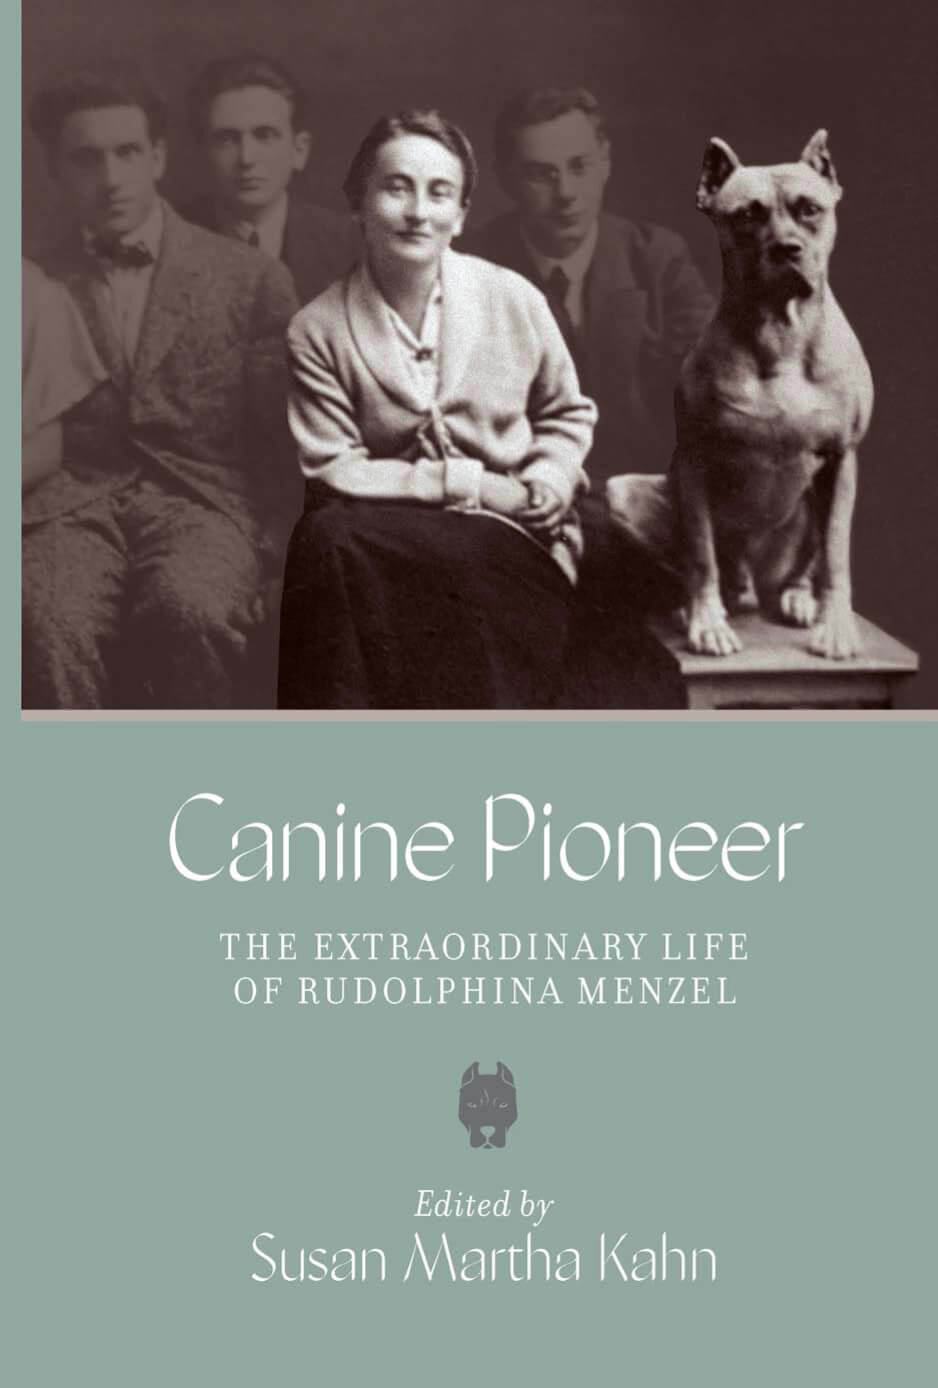 Susan Martha Kahn (Hg.): Canine Pioneer. The Extraordinary Life of Rudolphina Menzel, 2022, Waltham Massachusetts, Brandeis University Press 